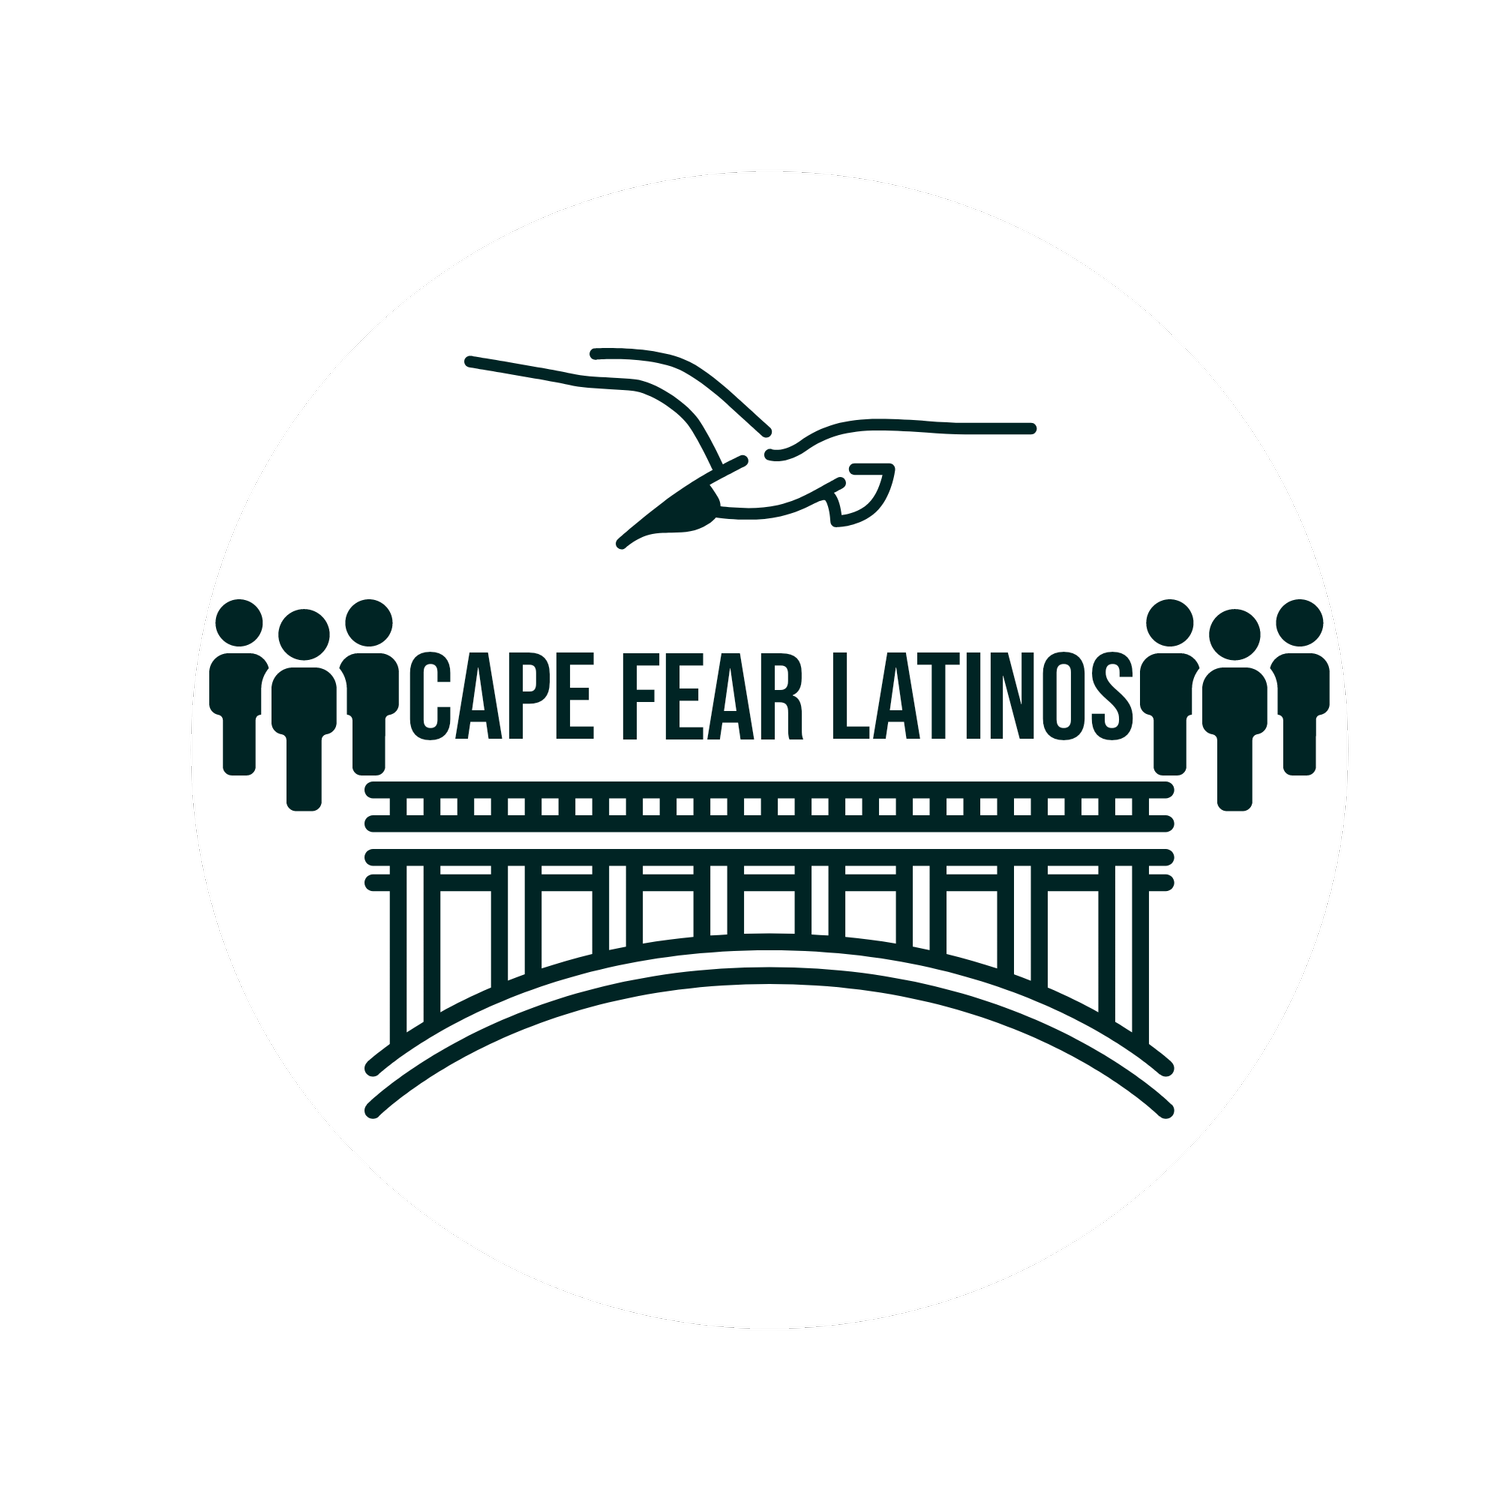  Cape Fear Latinos